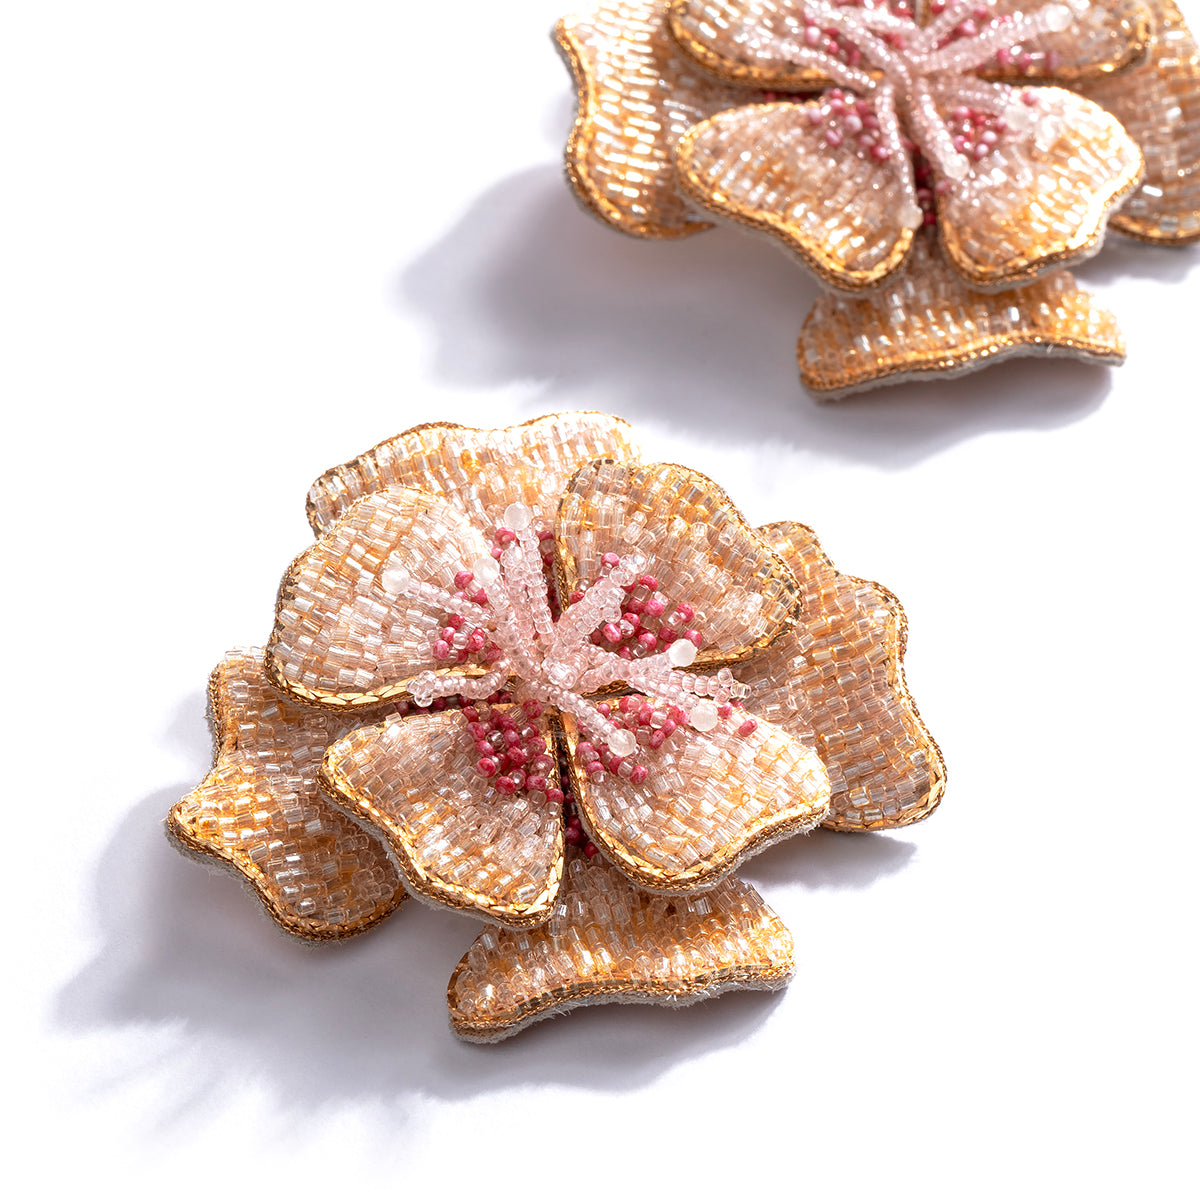 Deepa Gurnani handmade the Mazee earrings in baby pink color